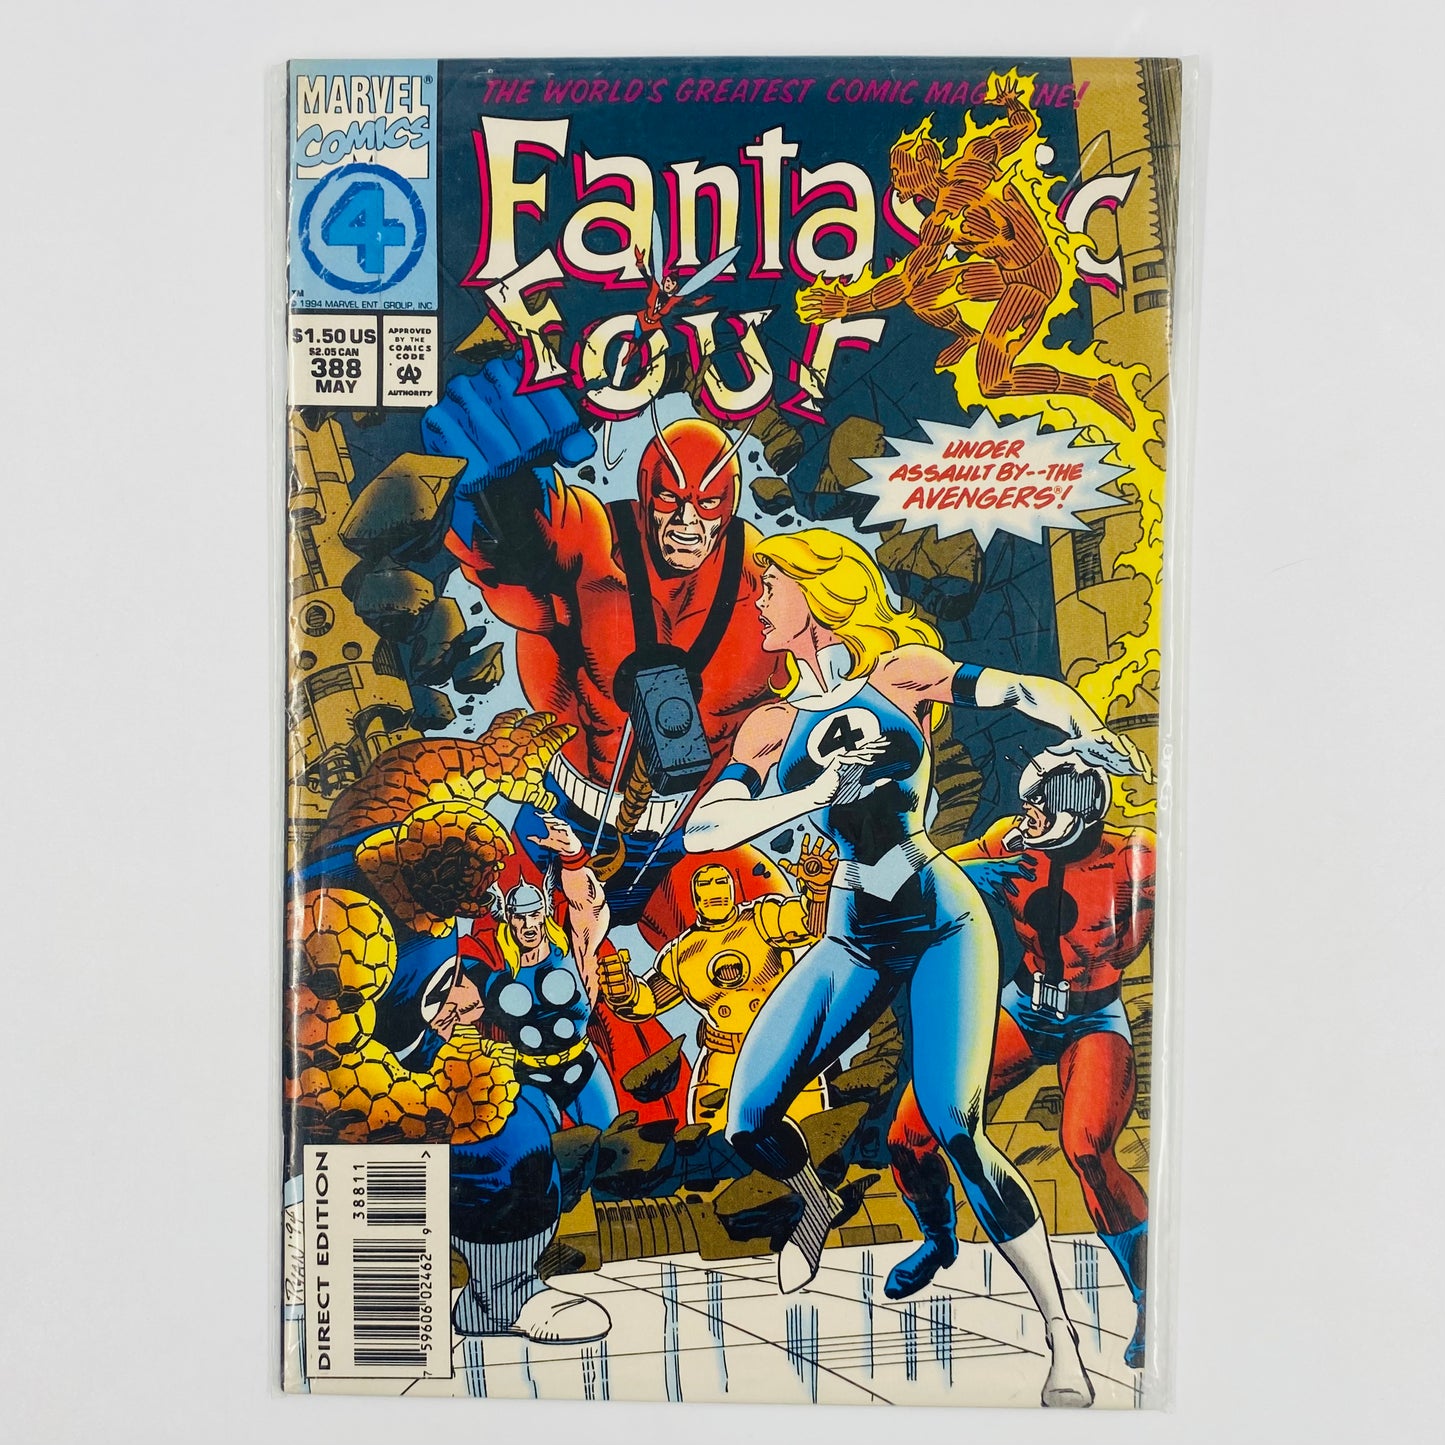 Fantastic Four #388 “Deadly is the Dark Raider" (1994) Marvel